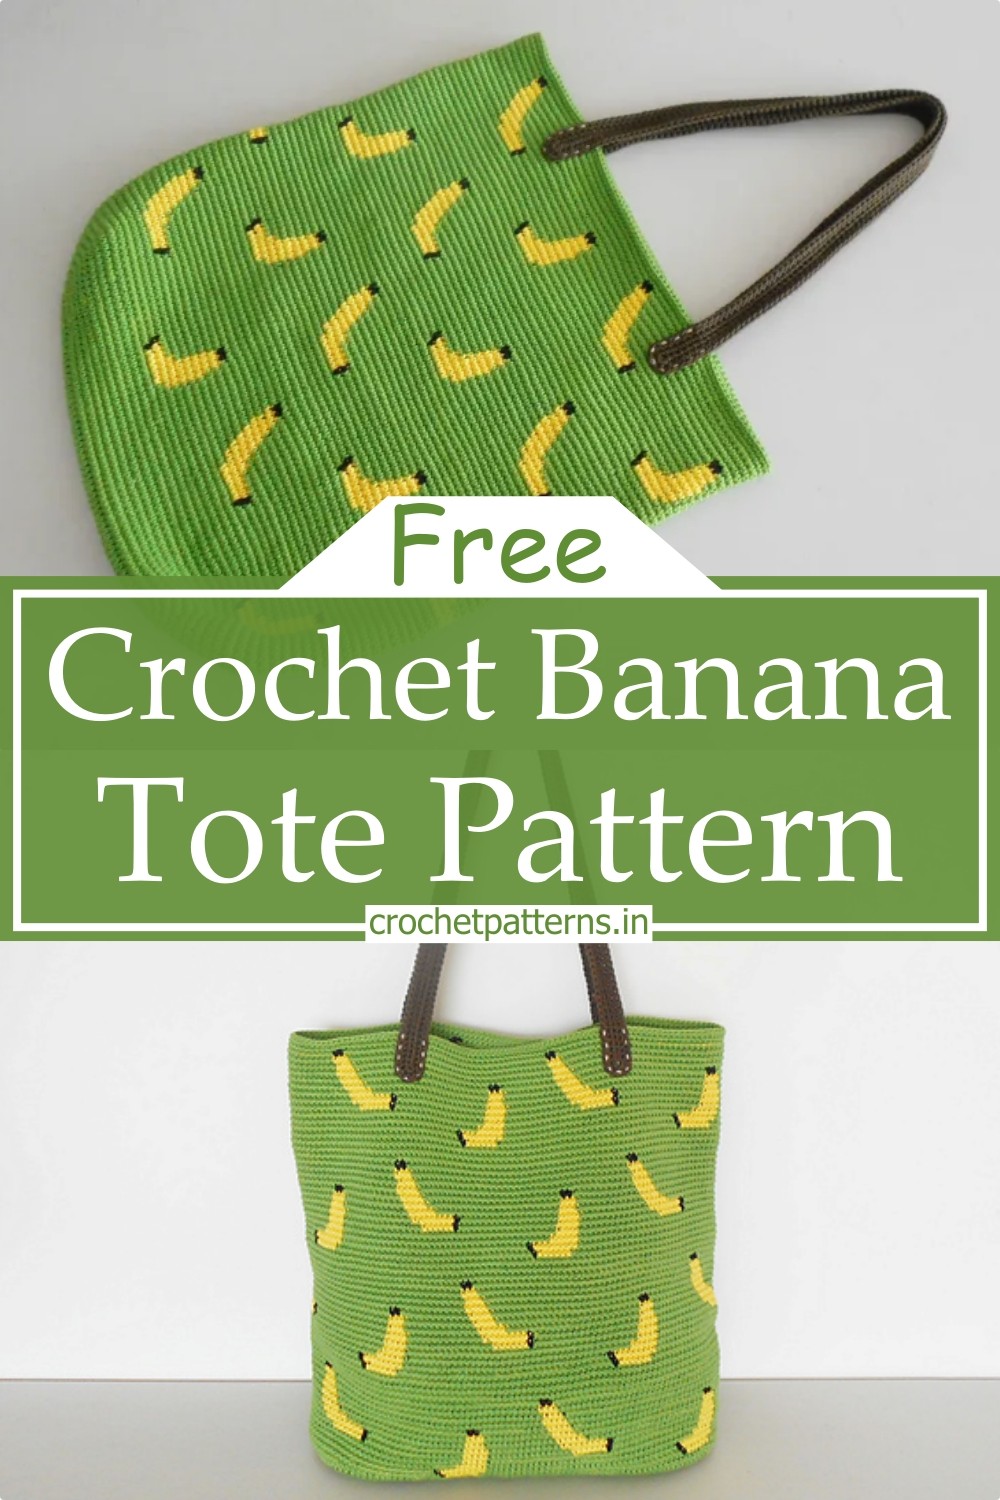 Crochet Banana Tote Pattern